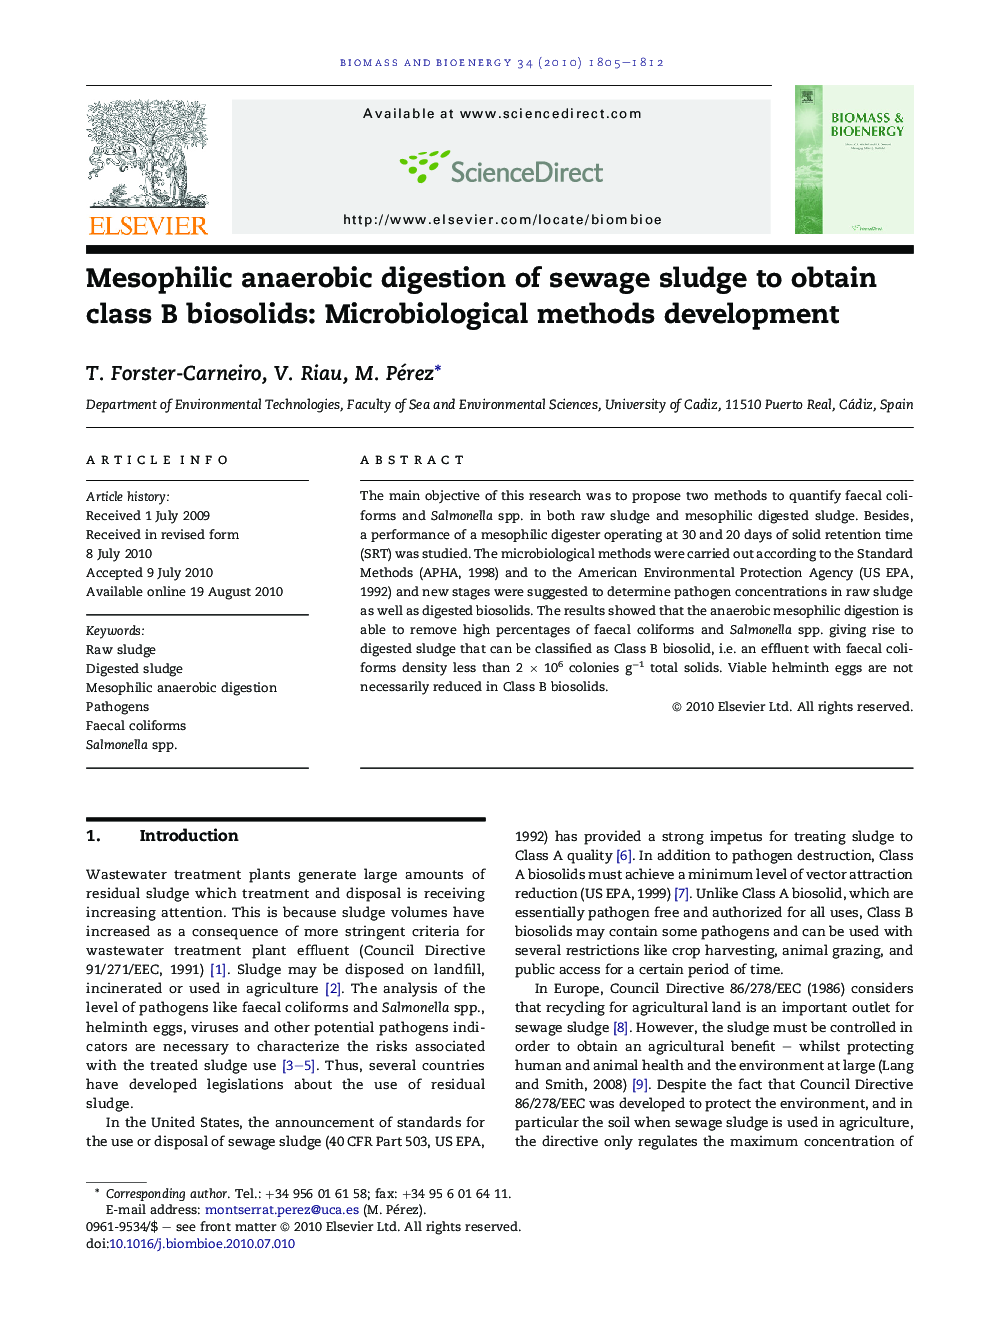 Mesophilic anaerobic digestion of sewage sludge to obtain class B biosolids: Microbiological methods development